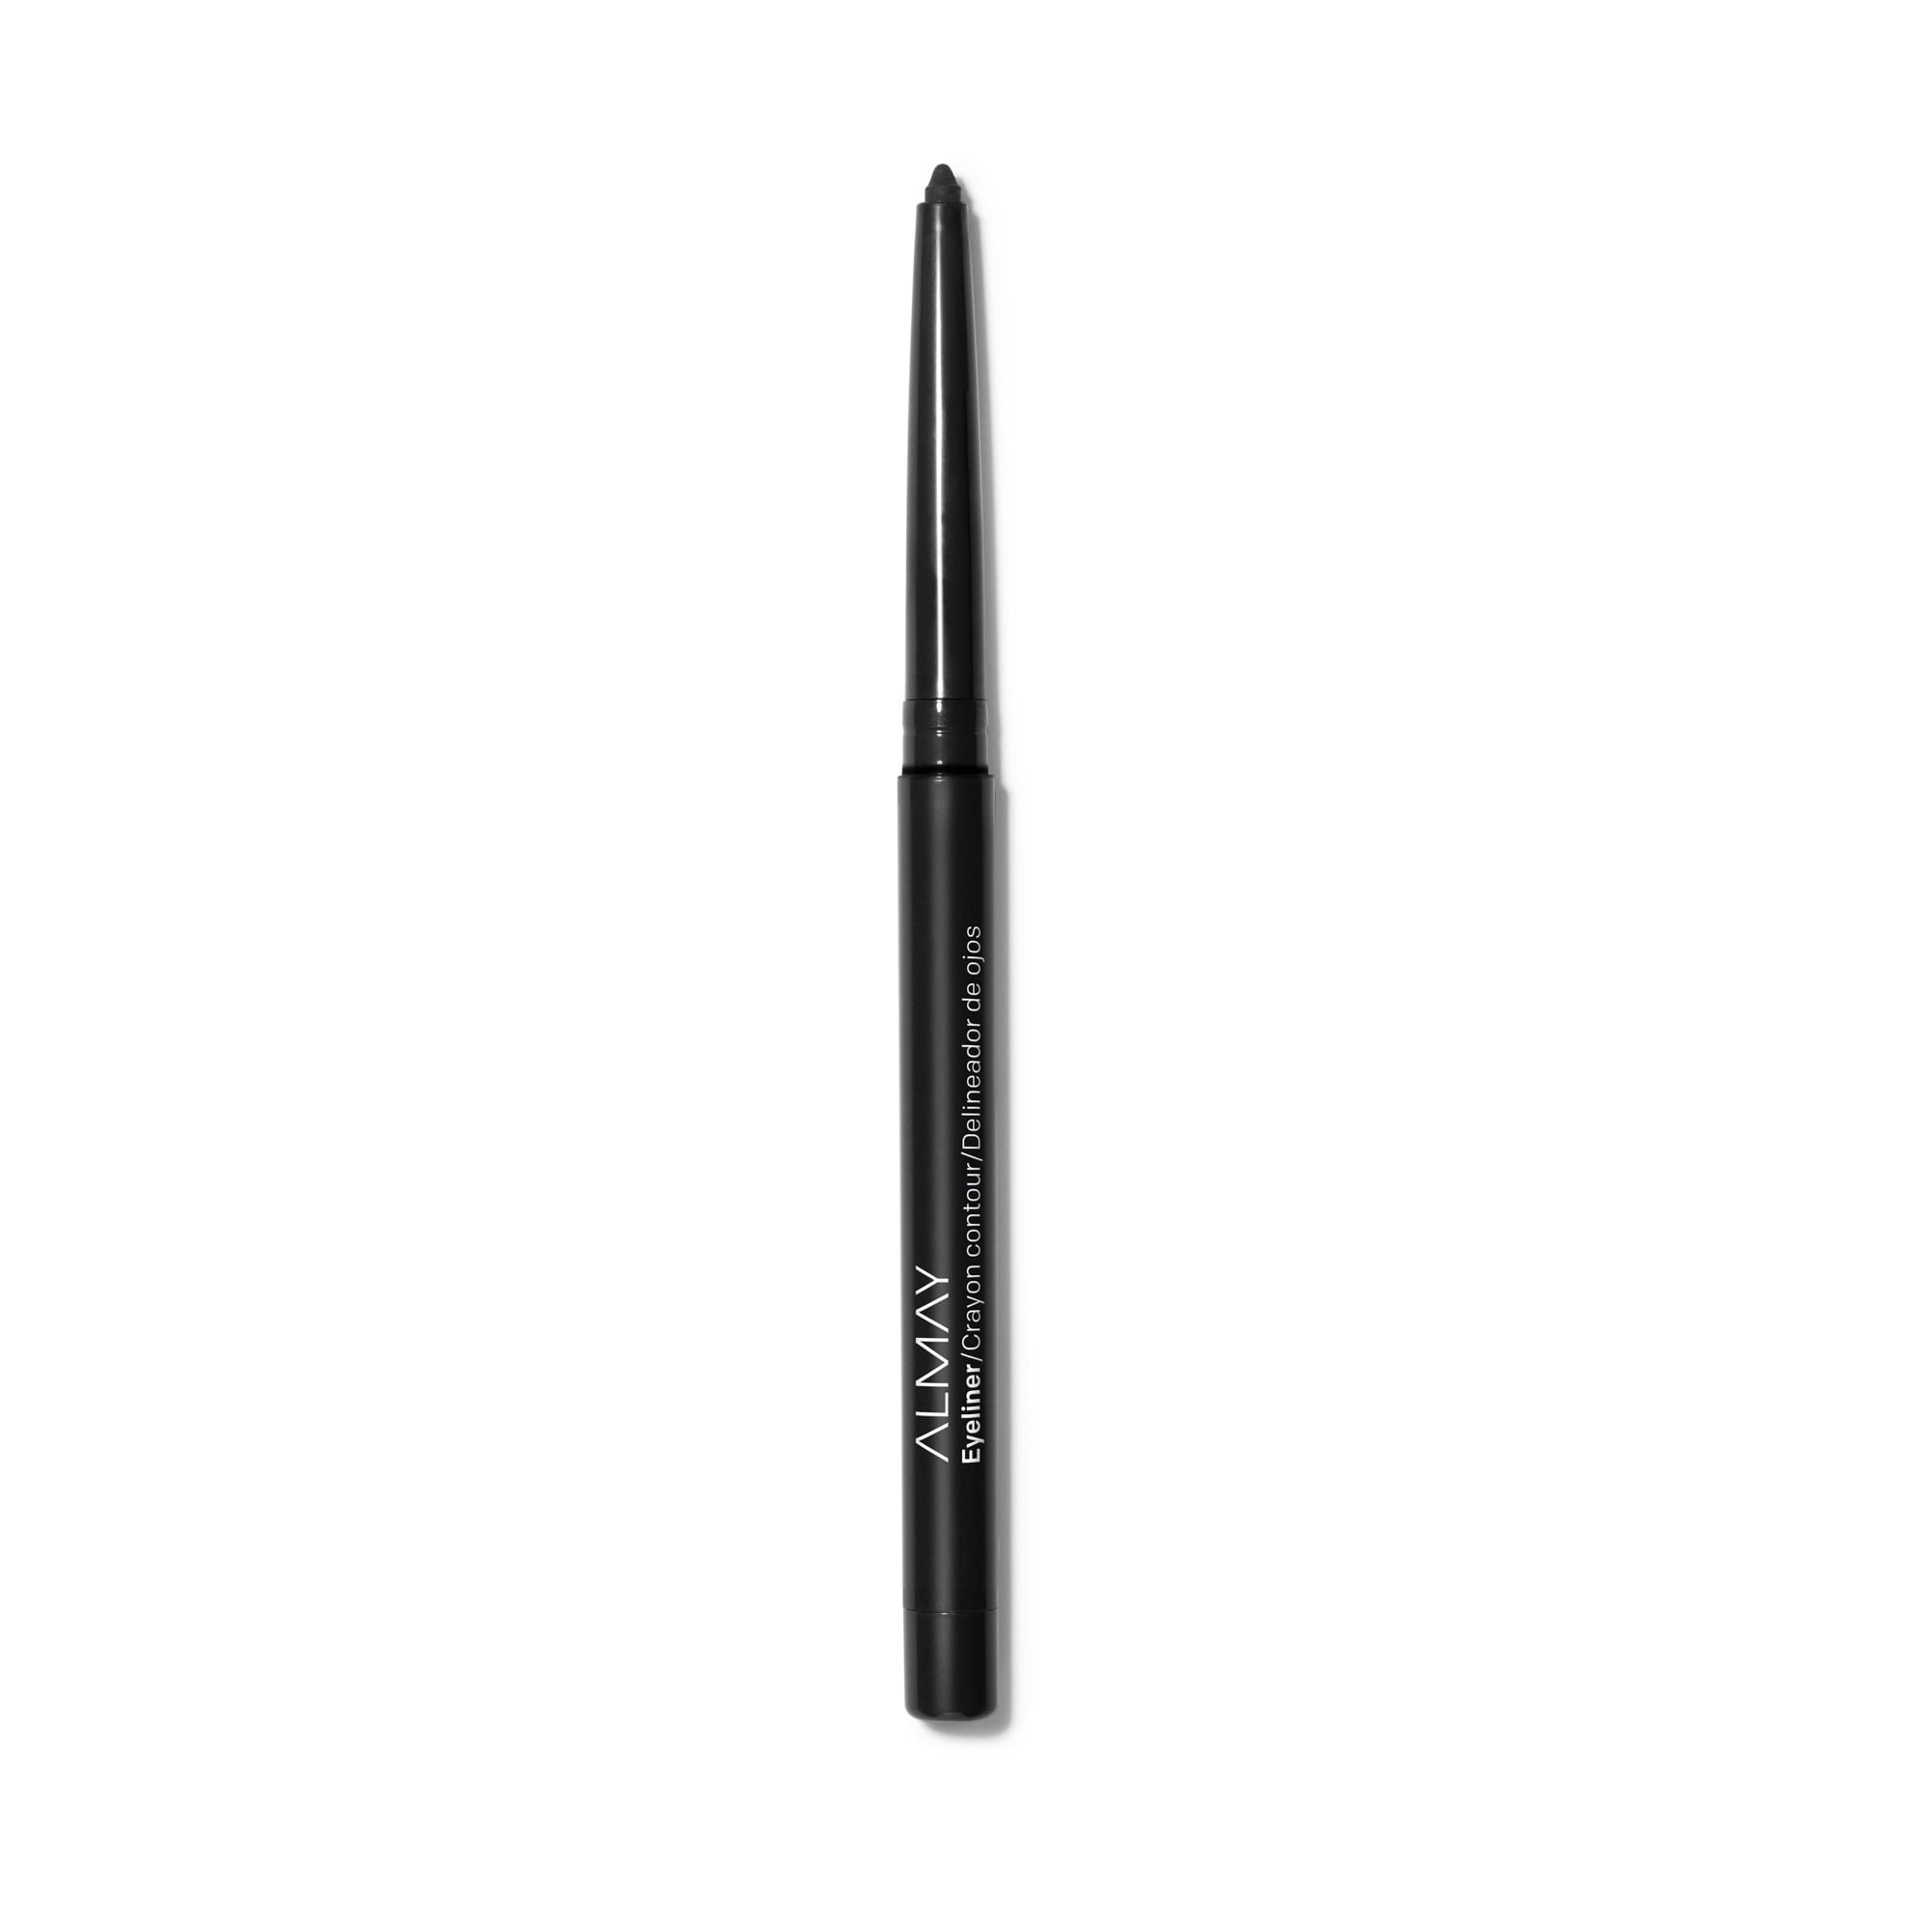 Almay Crayon Contour Water Resistant Eyeliner Pencil, 208 Black Pearl - image 4 of 14